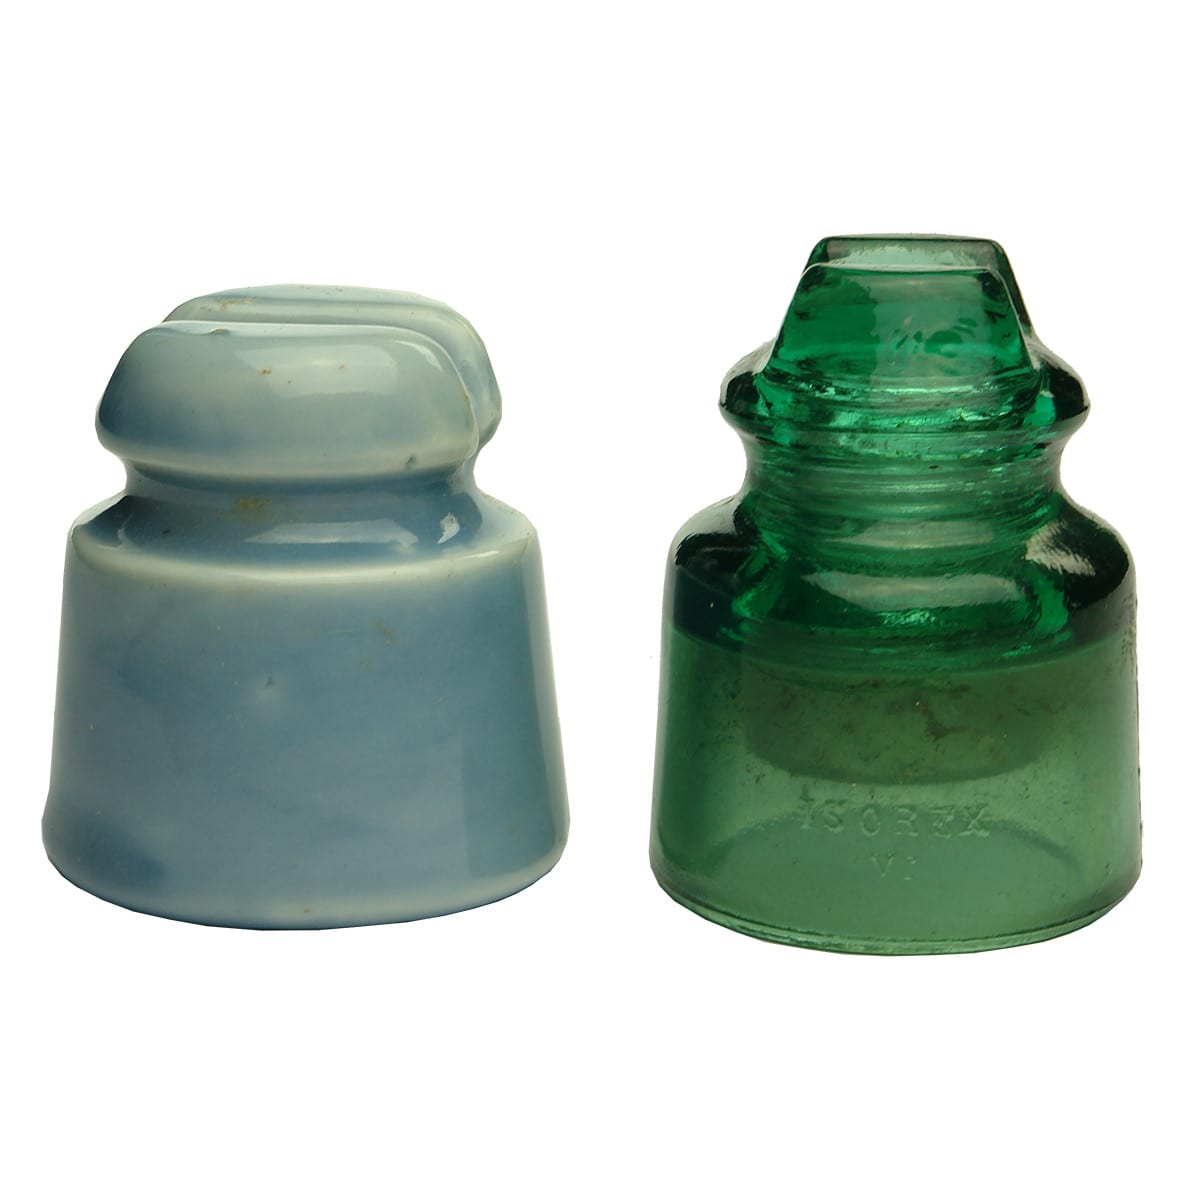 Insulators. Blue ceramic and green glass Isorex.